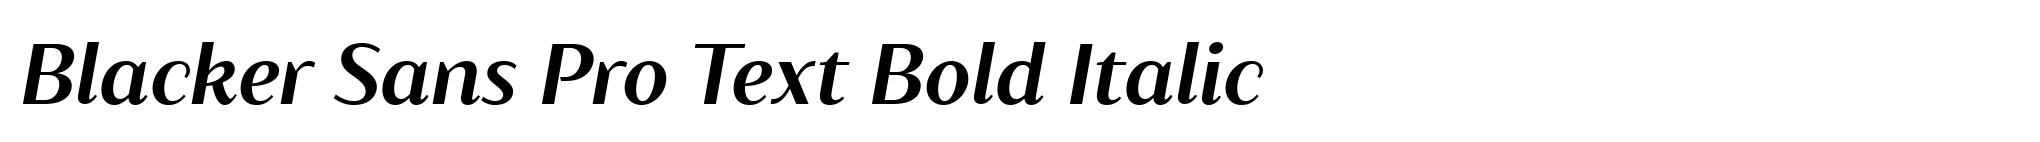 Blacker Sans Pro Text Bold Italic image